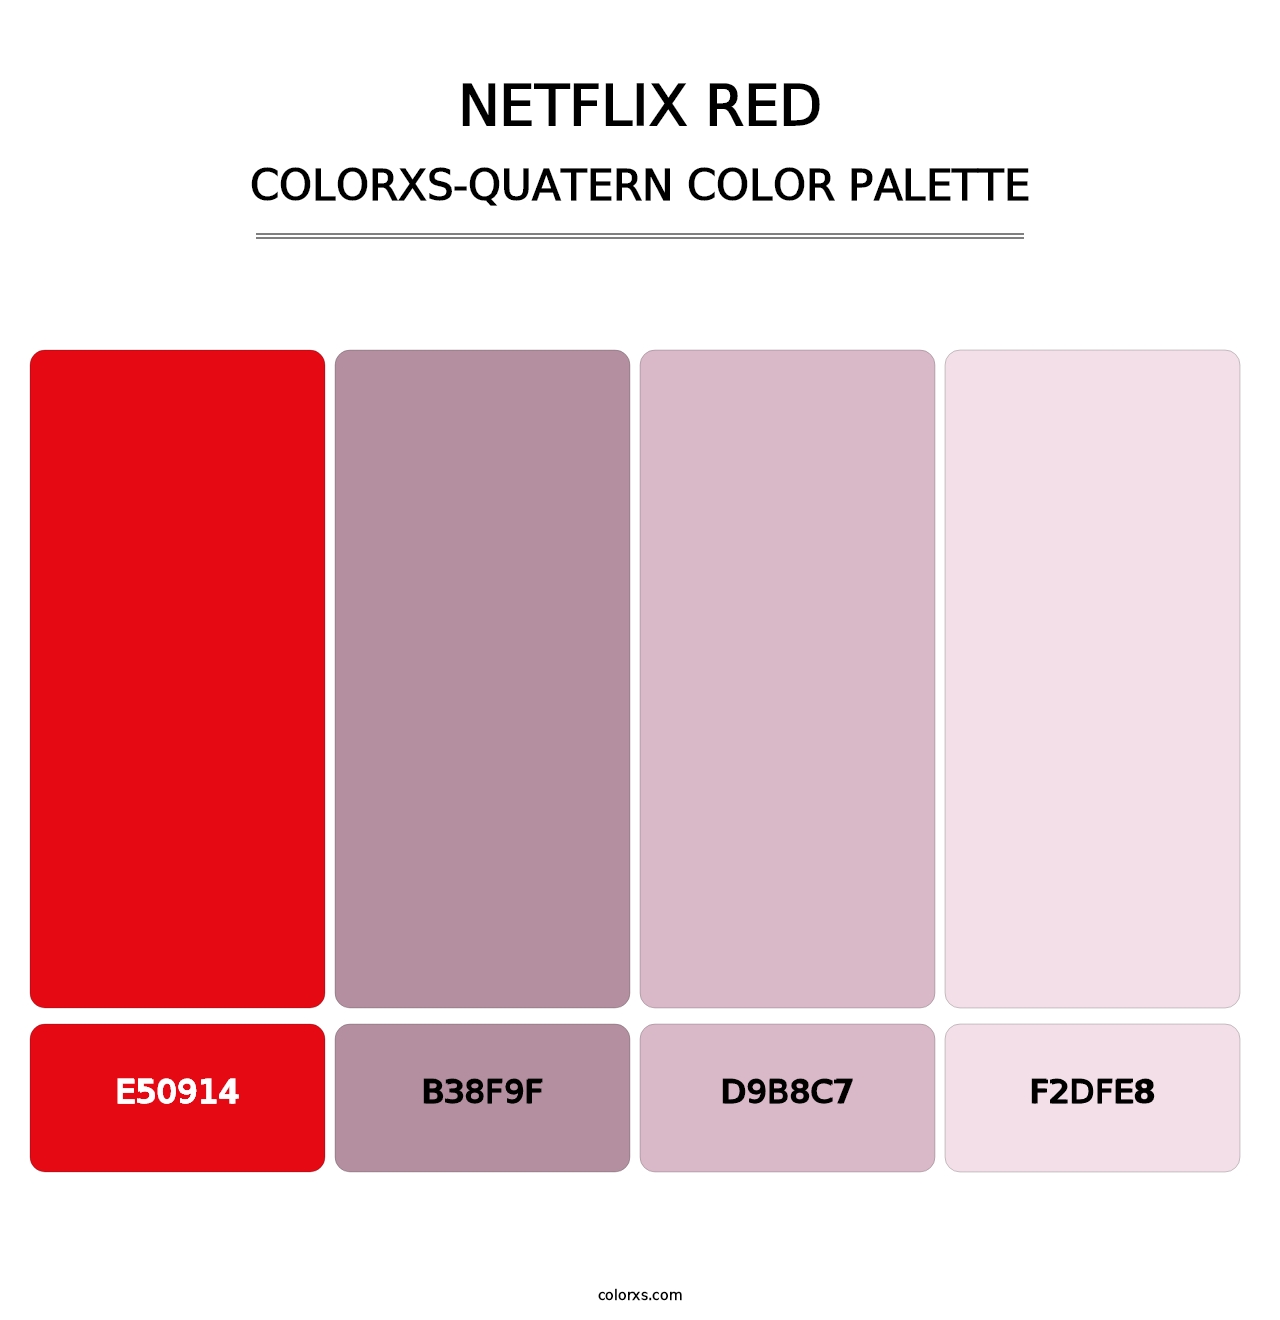 Netflix Red - Colorxs Quatern Palette